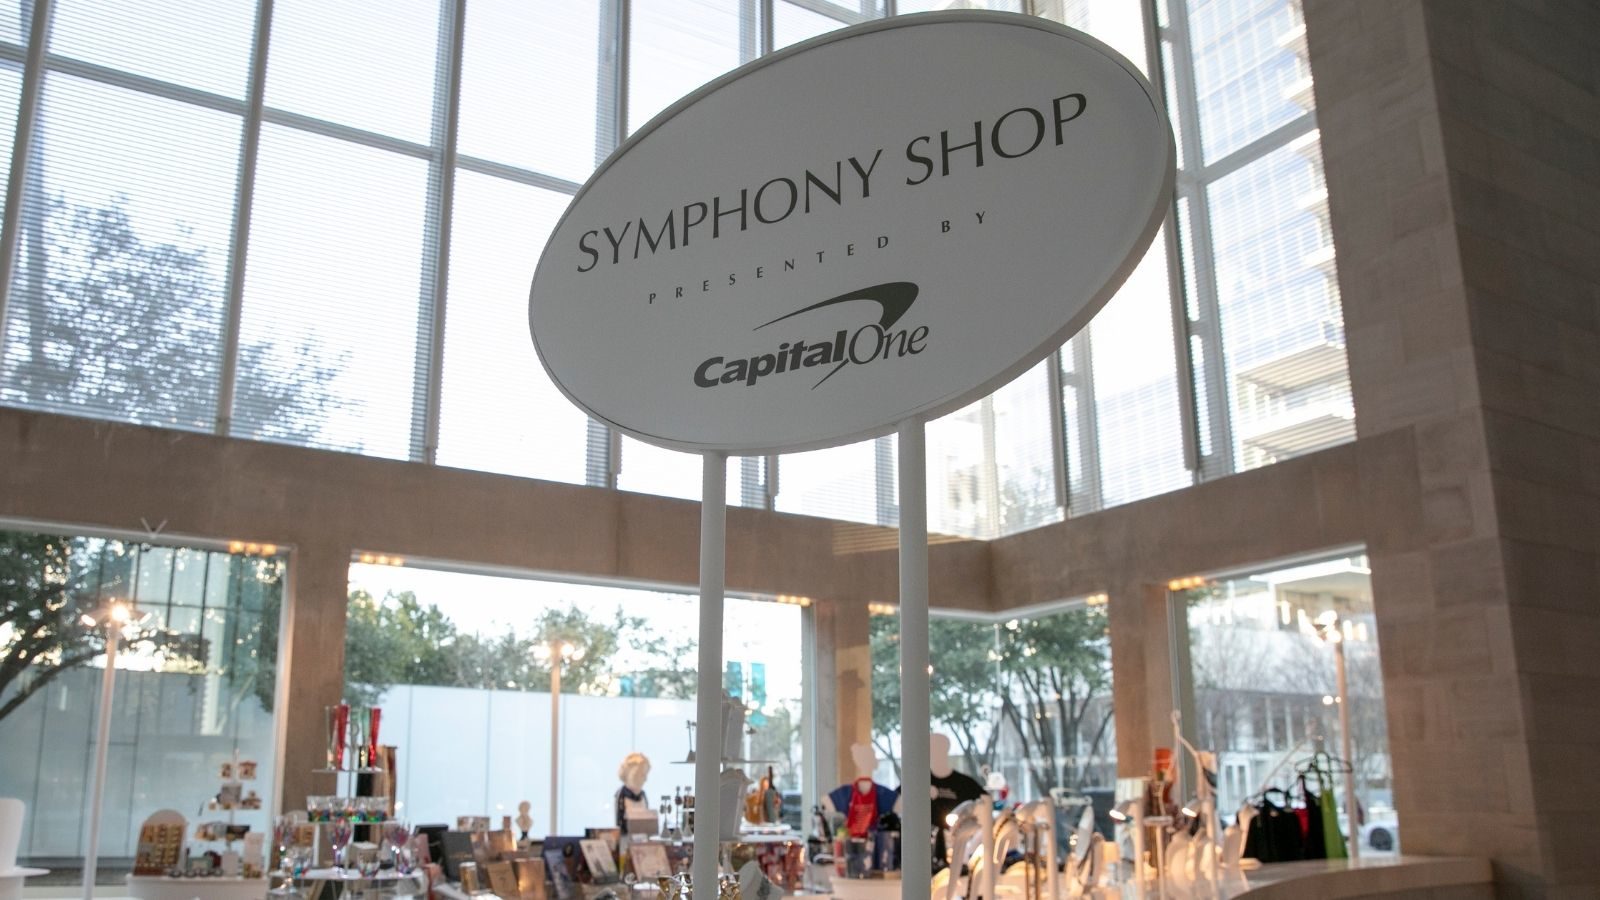 Capital One Symphony Shop Sign